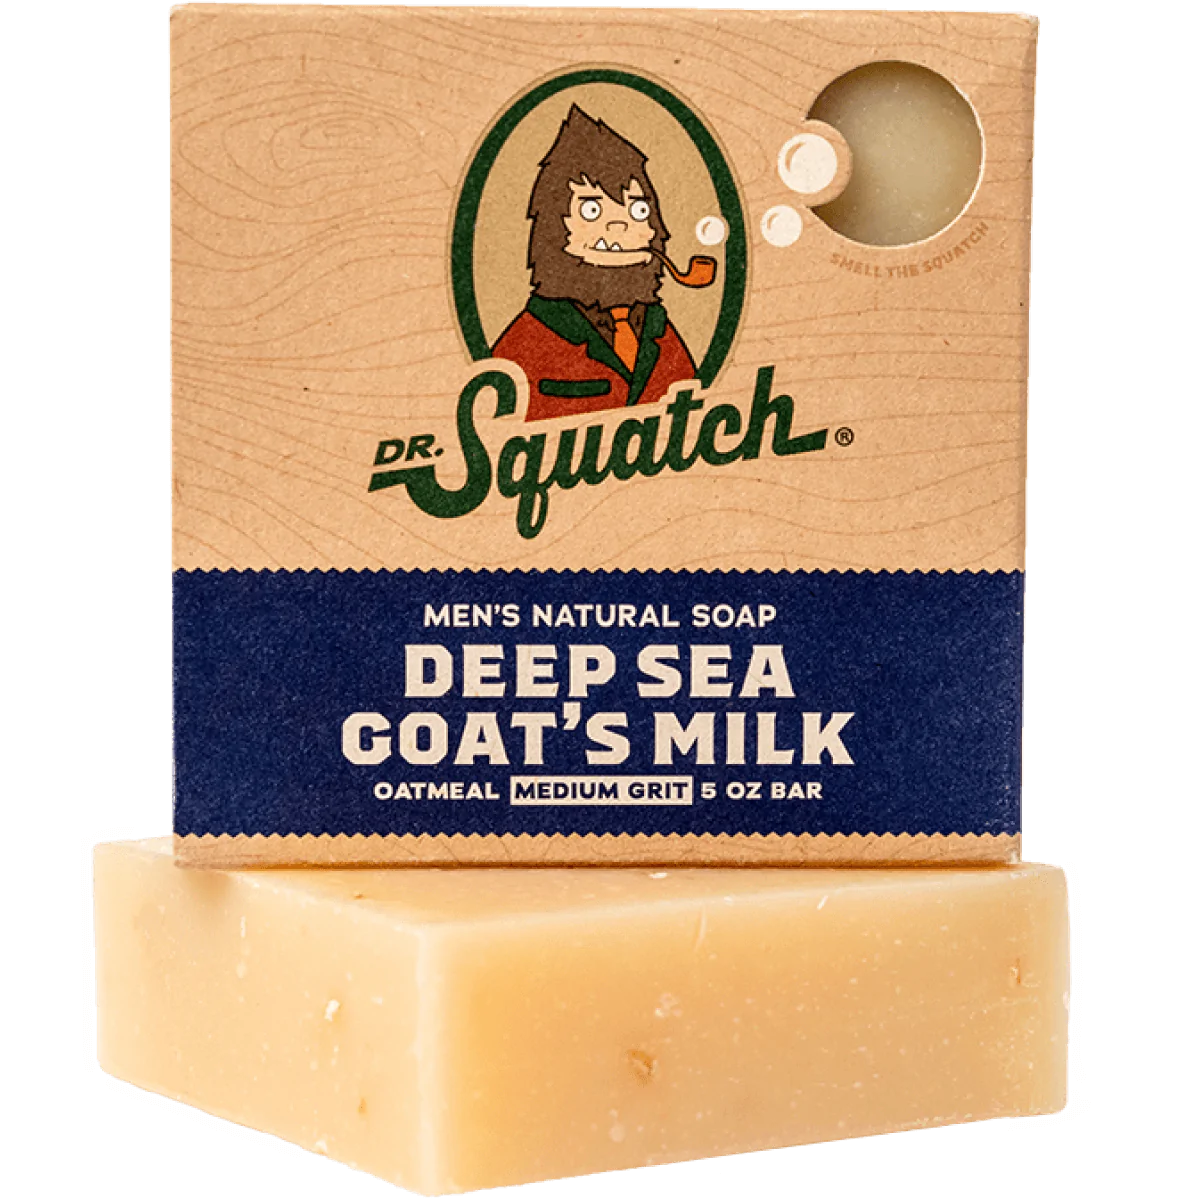 Deep Sea Goats Milk Dr. Squatch